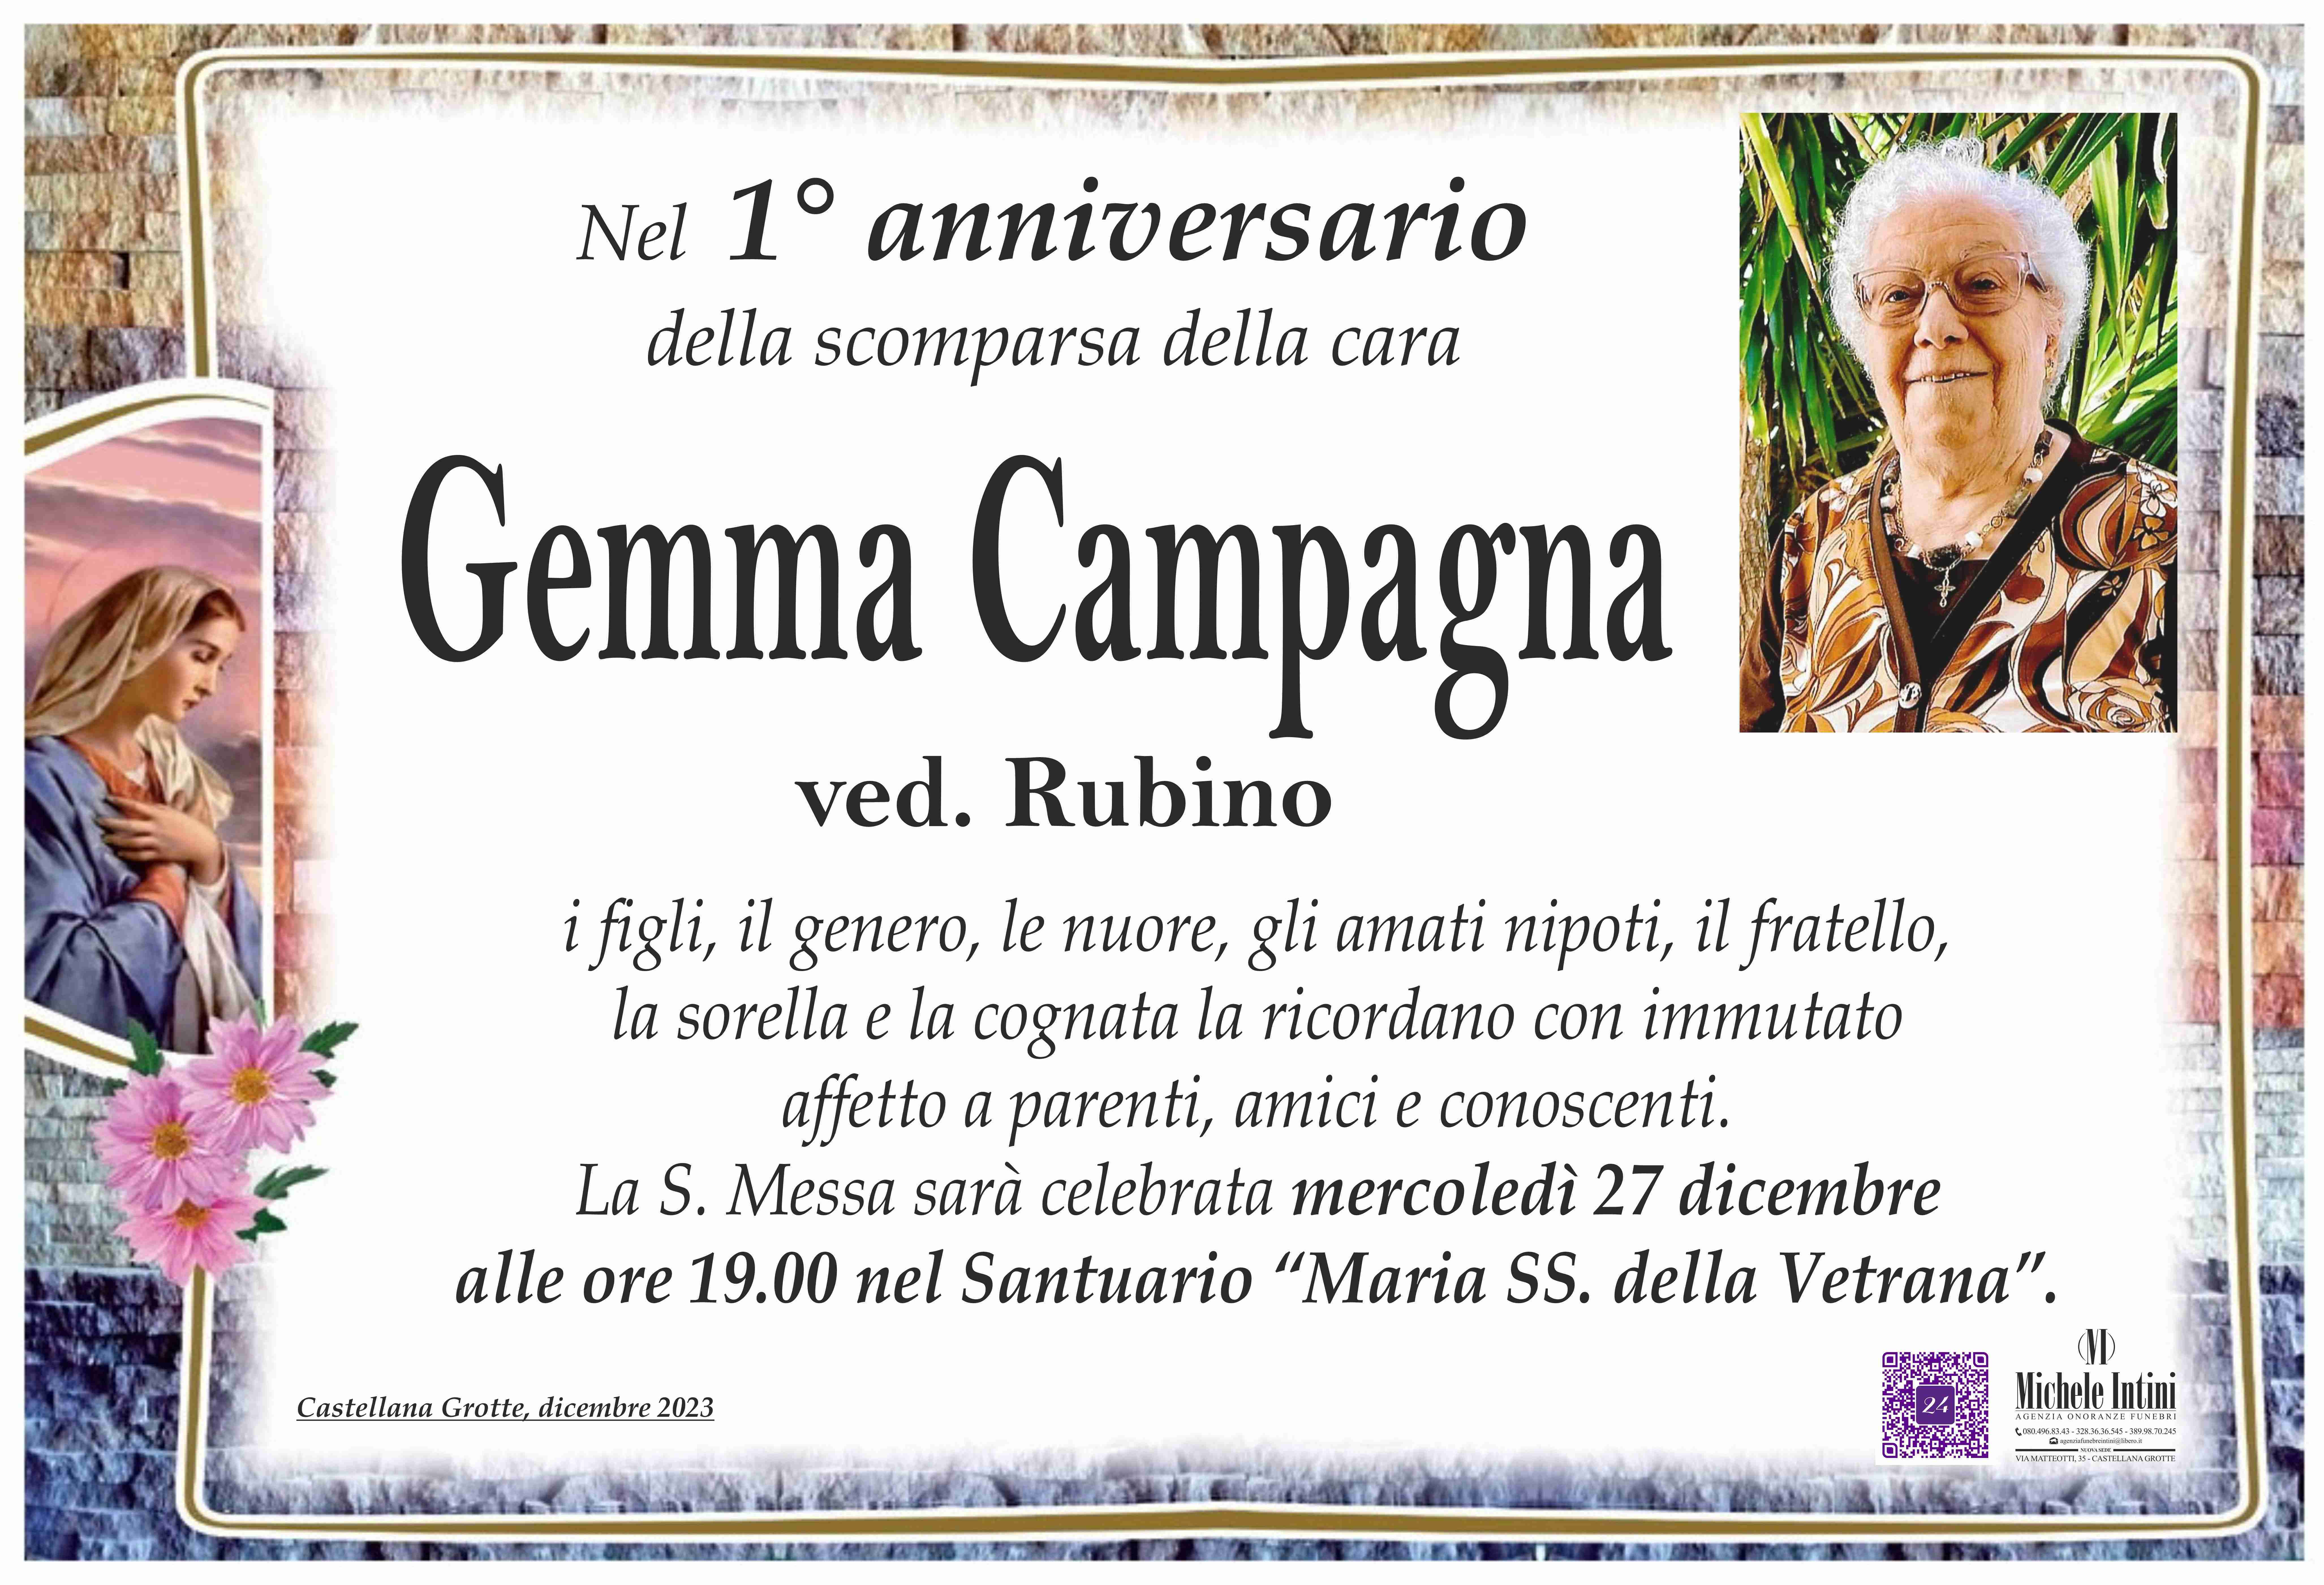 Gemma Campagna